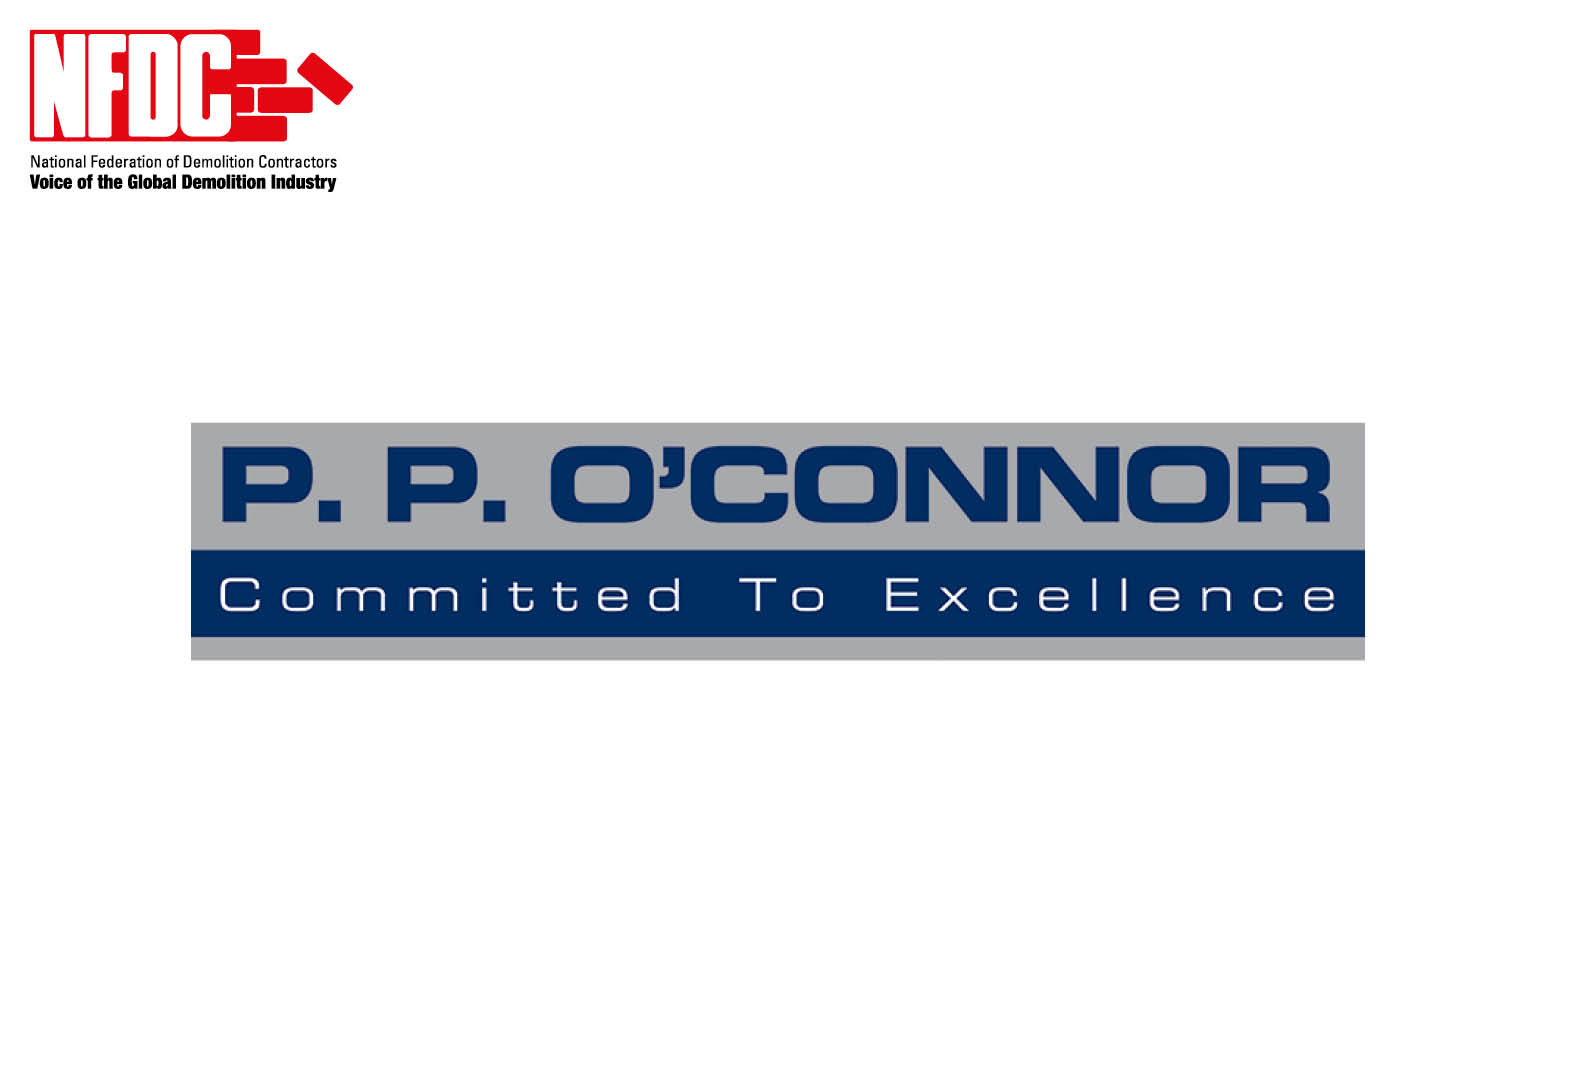 P P O’Connor Group Ltd